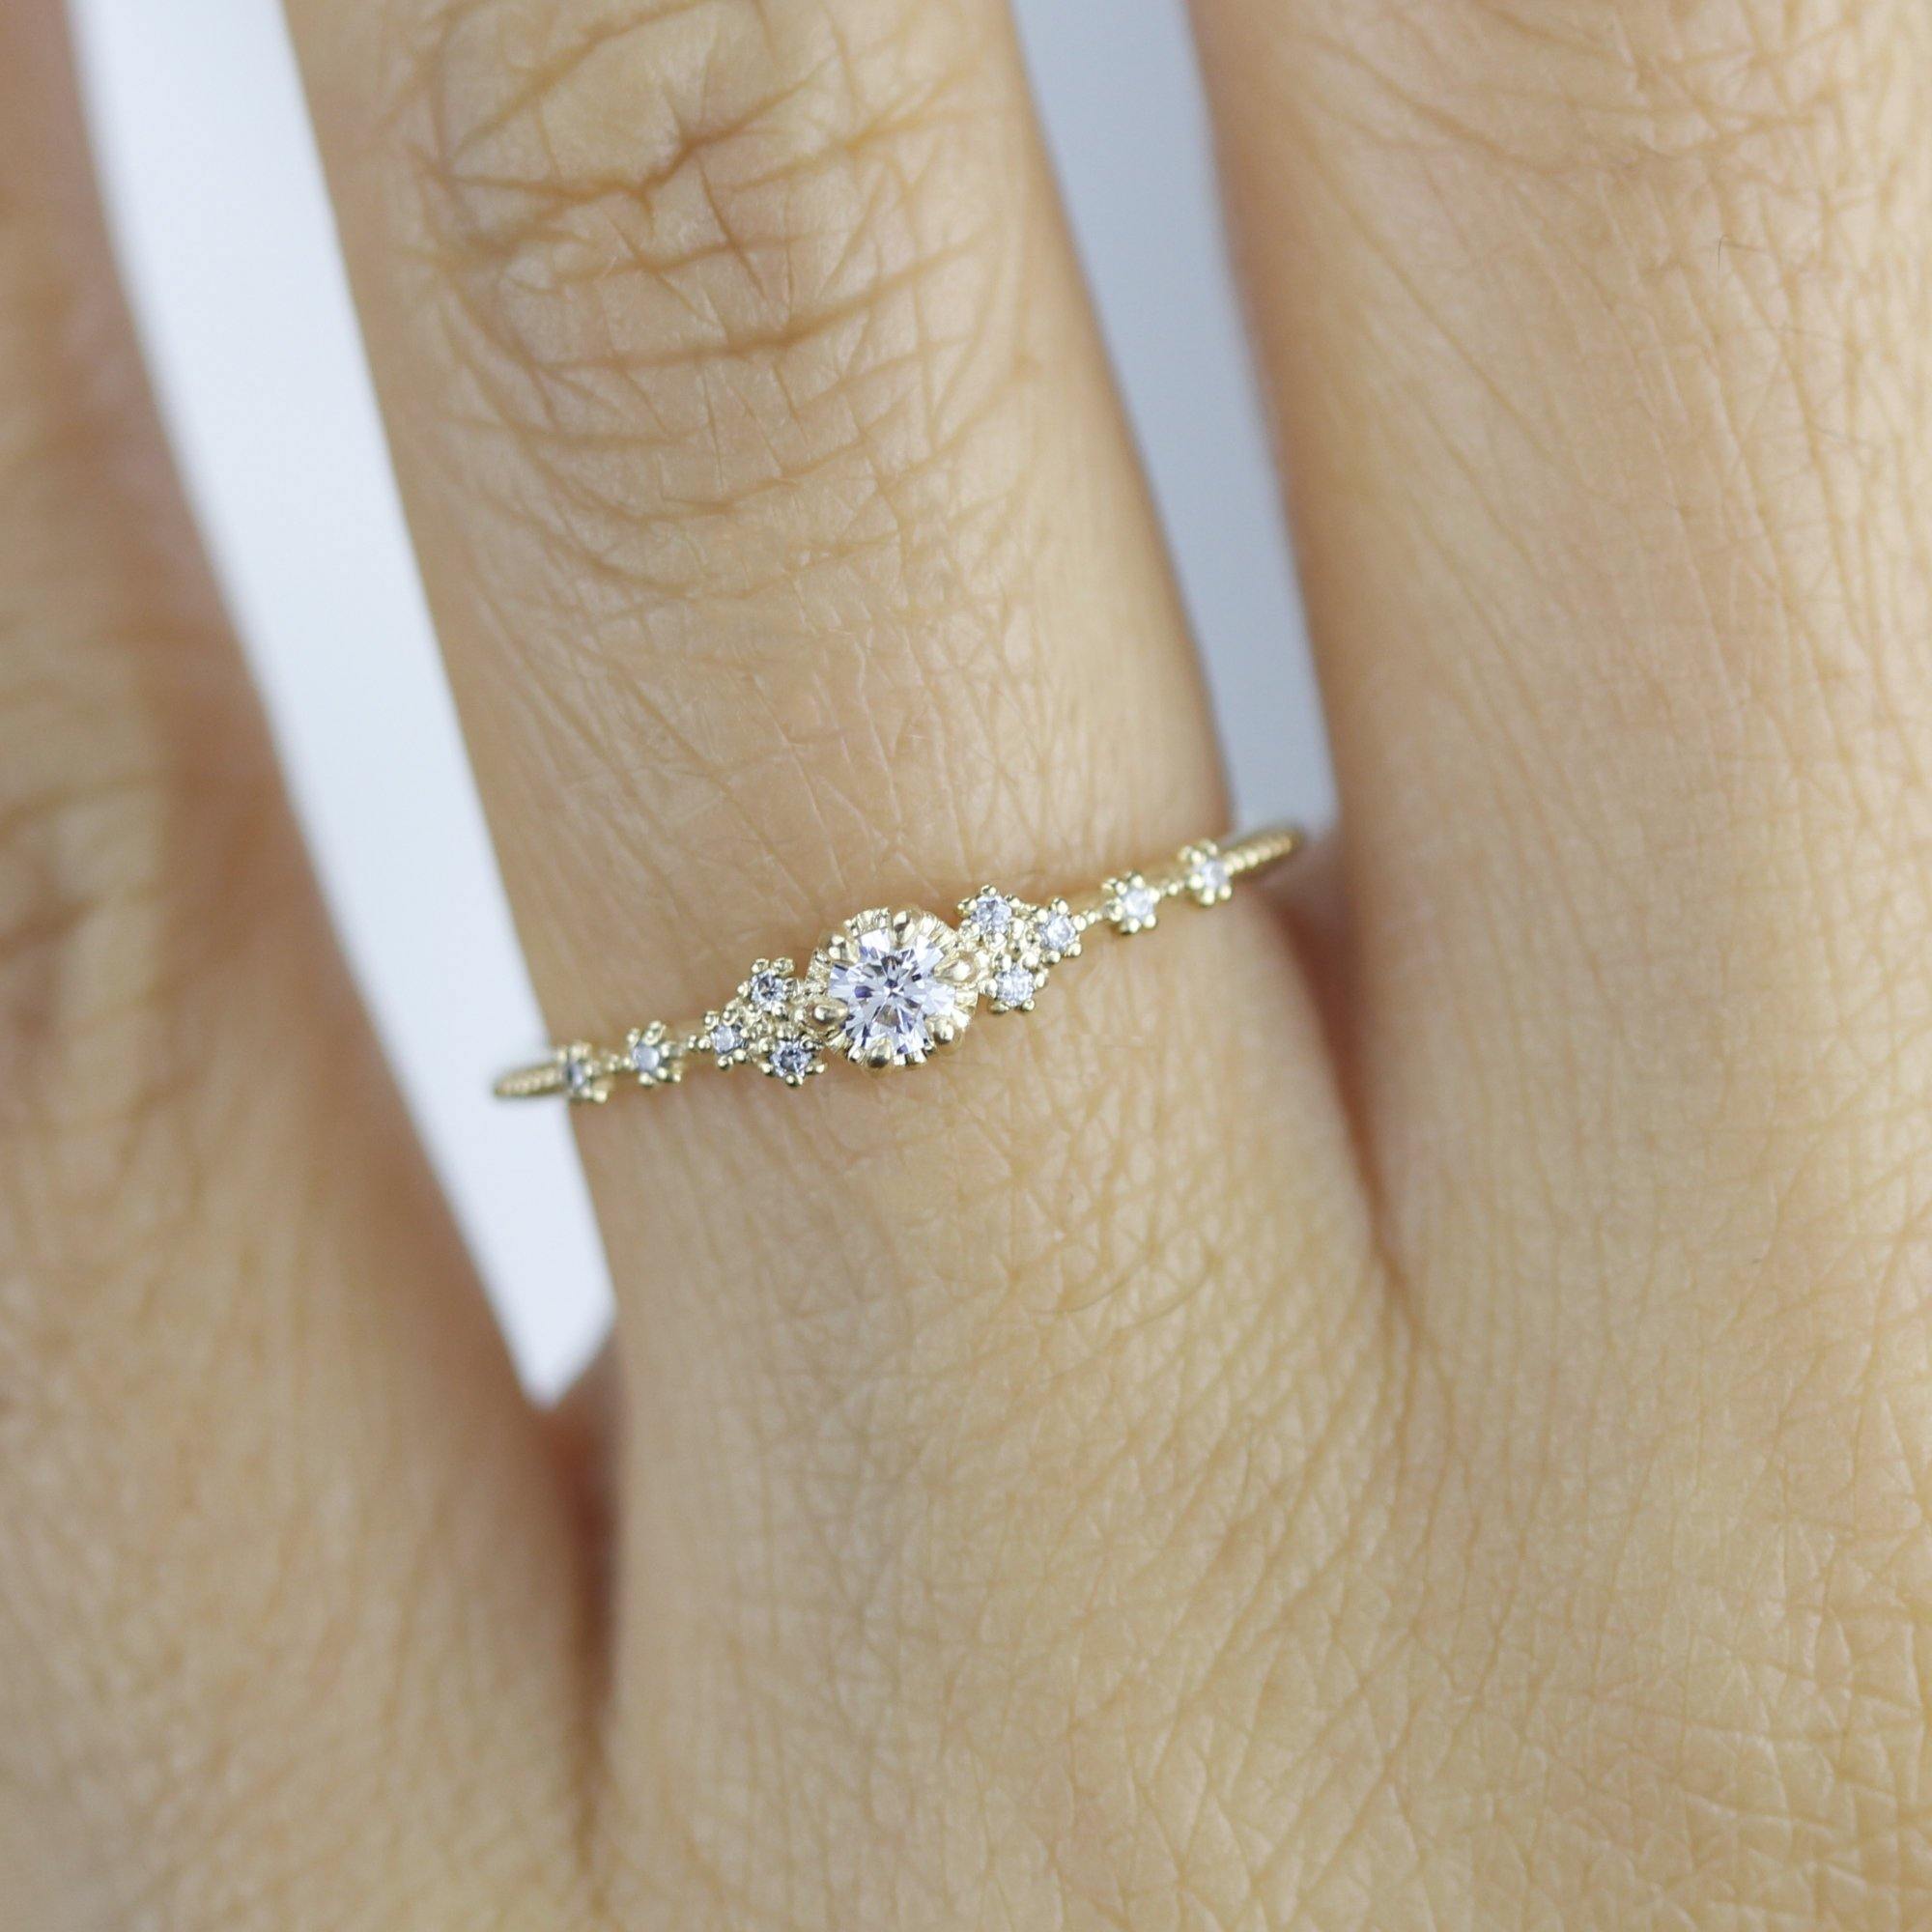 Top 10 Tips While Purchasing a Dainty Diamond Ring – Vero Diamonds